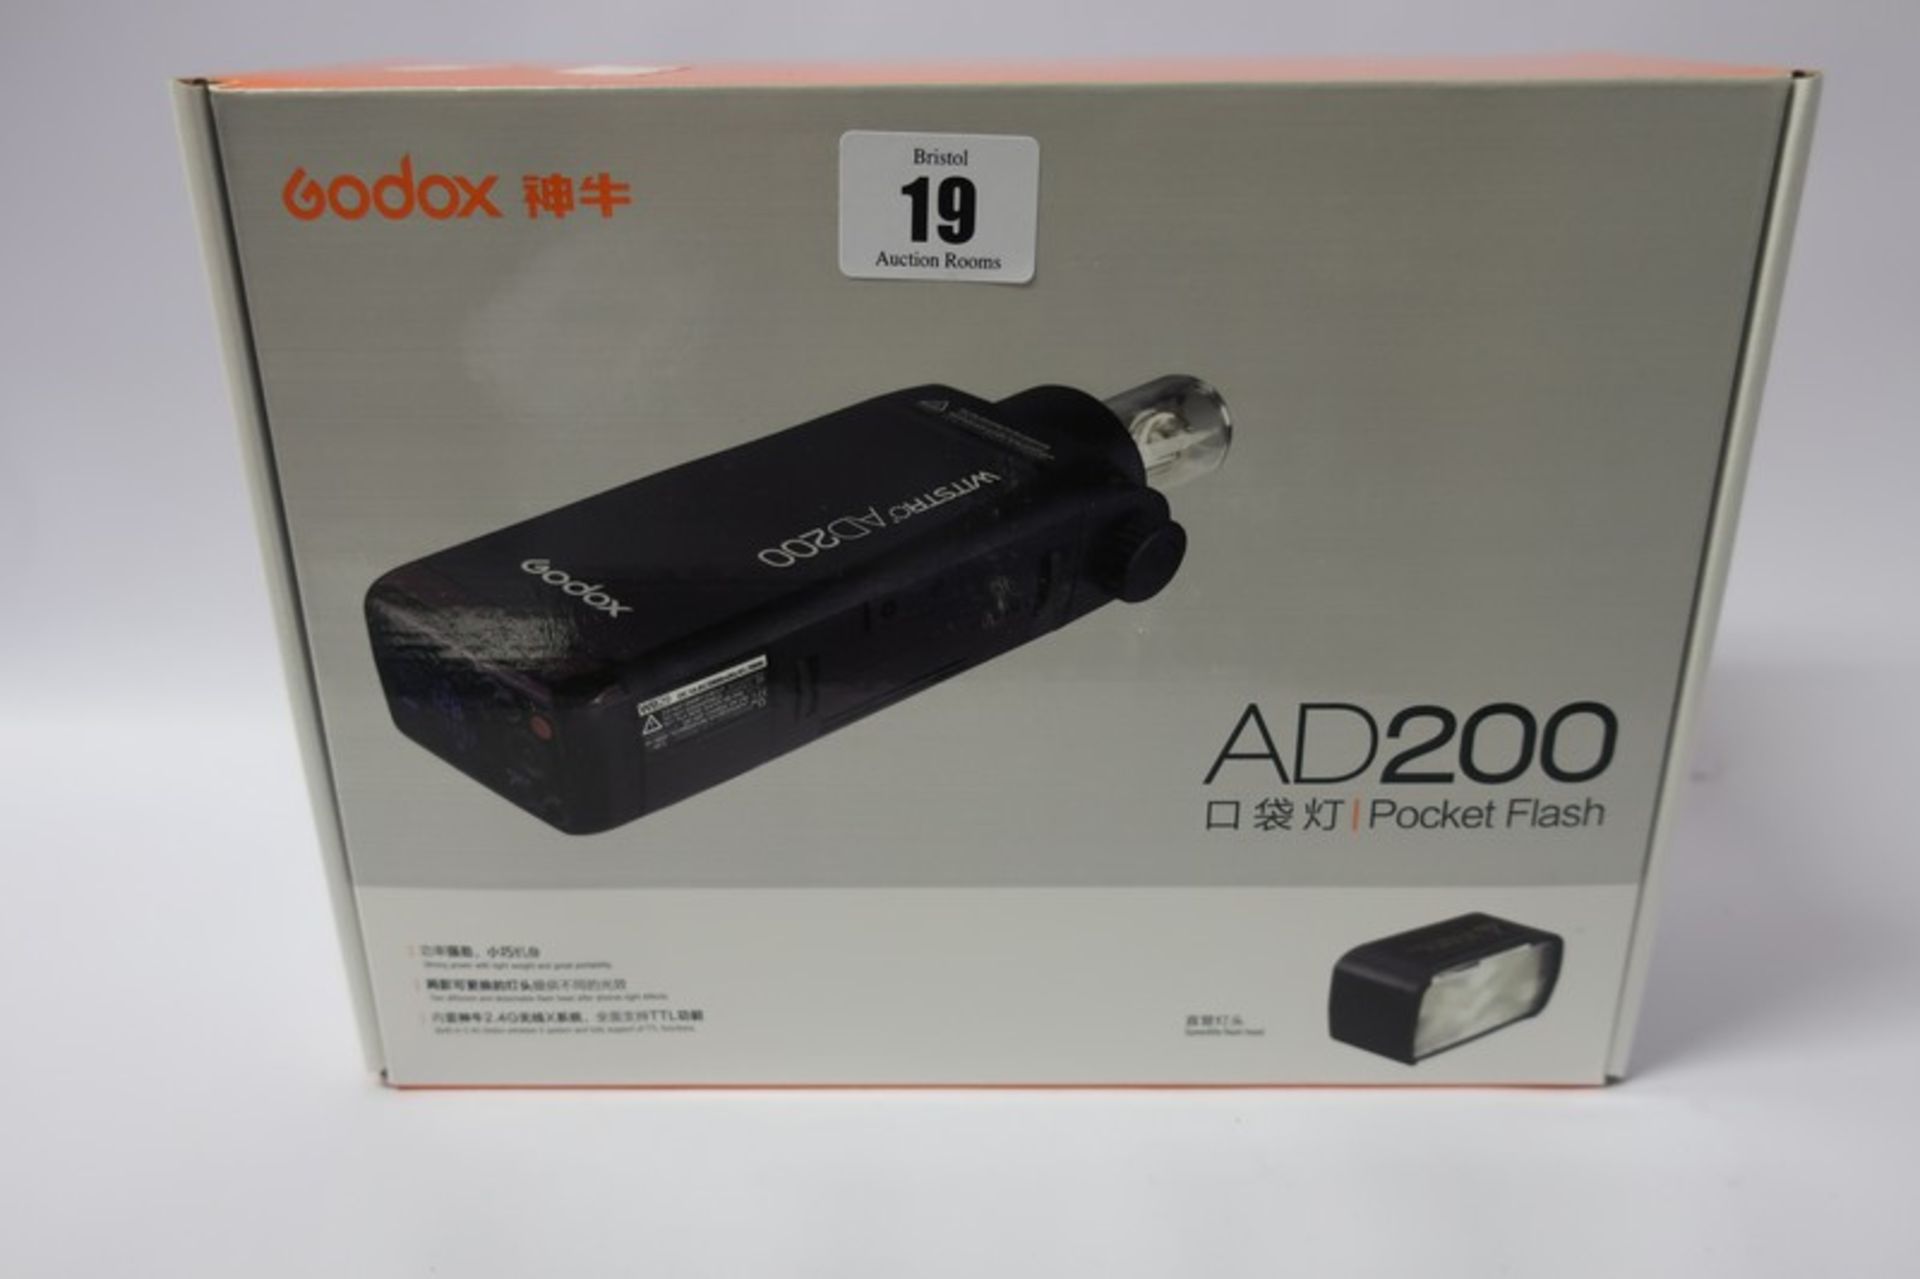 A boxed as new Godox AD200 pocket flash.